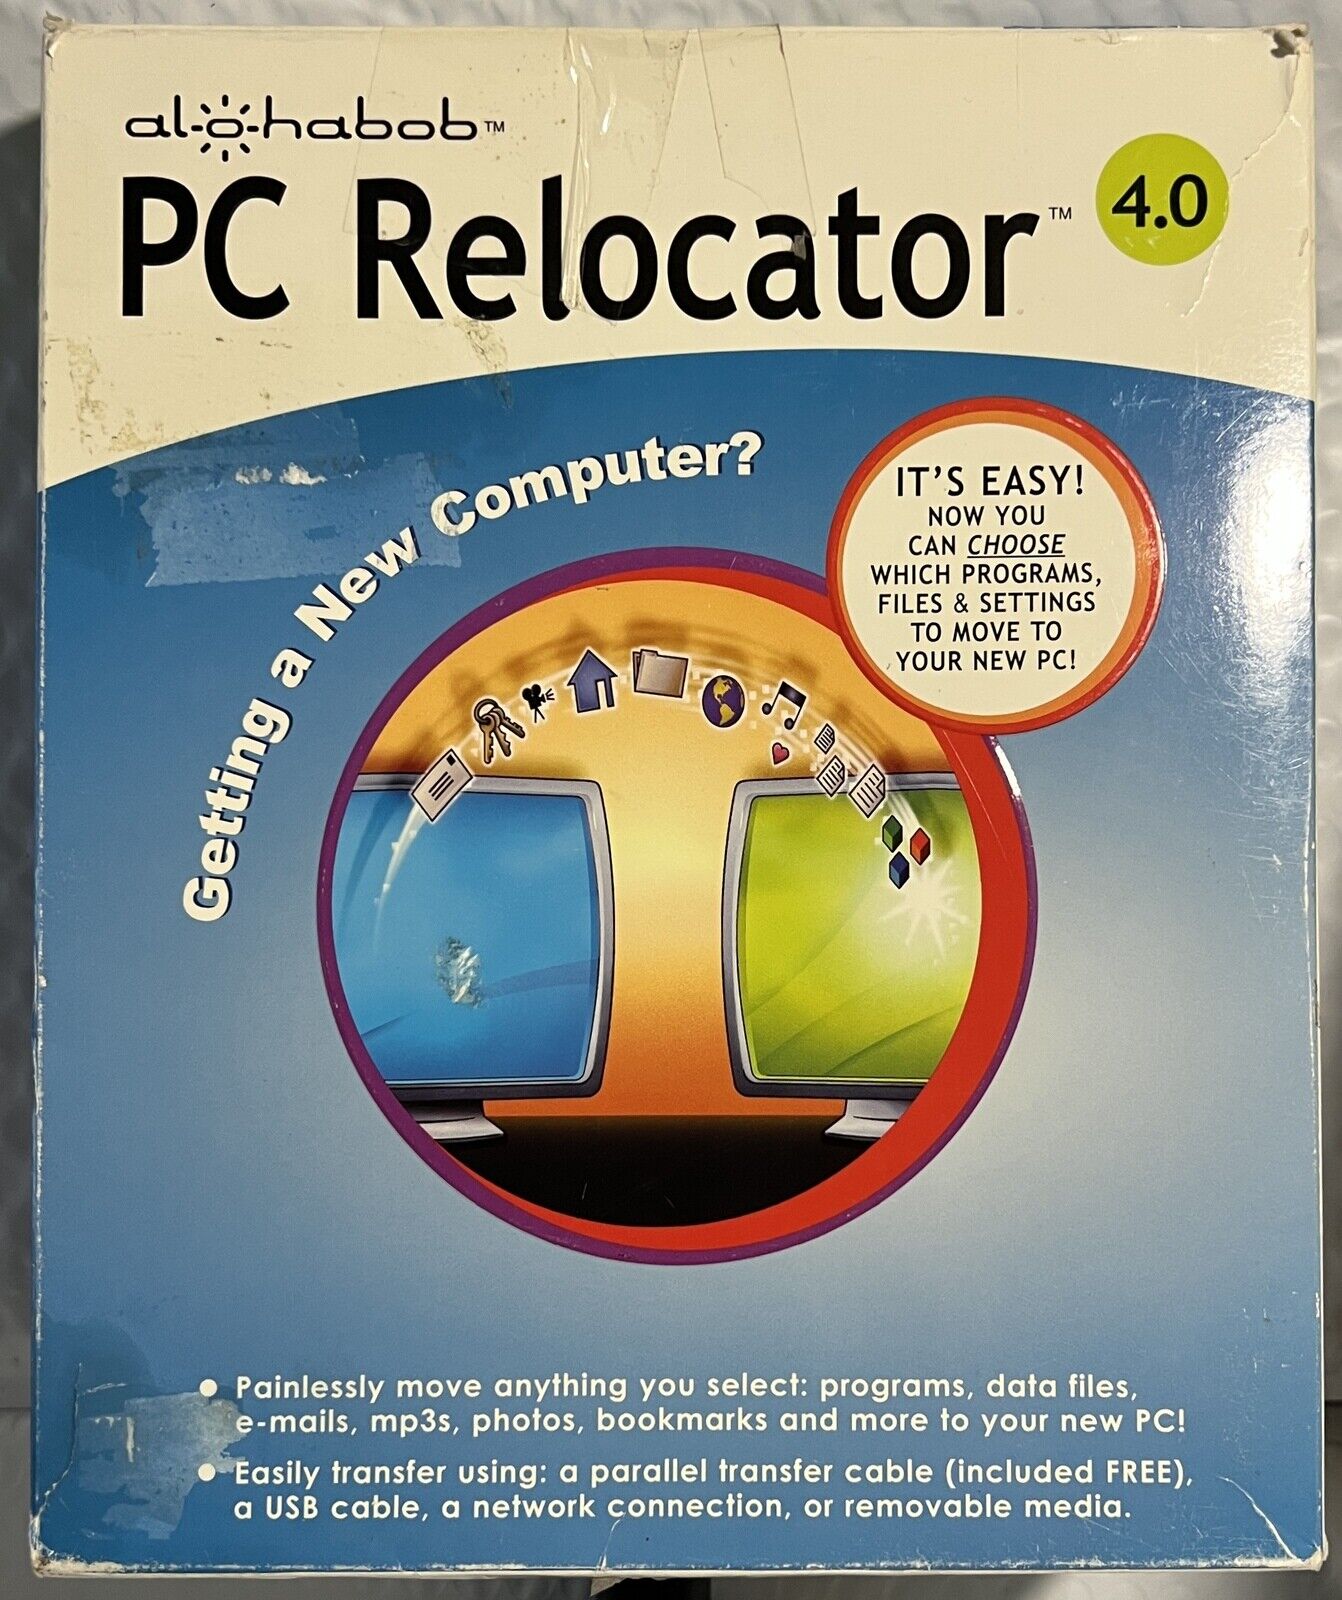 PC Relocator 4.0 [Windows 95/98/ME/NT/2000 Pro/XP, CD-ROM, 712692956274]